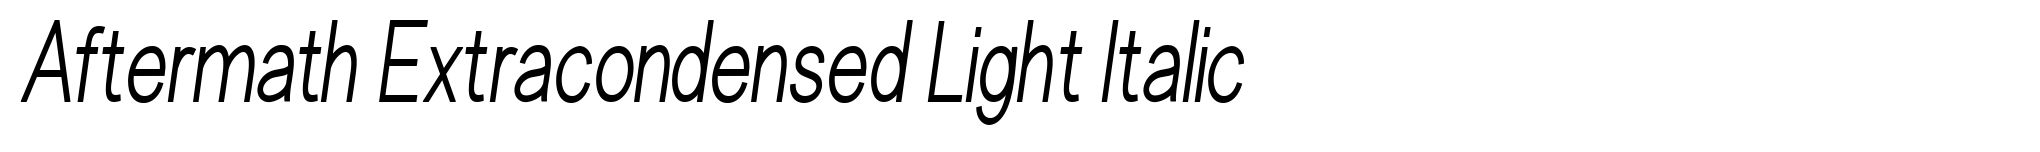 Aftermath Extracondensed Light Italic image